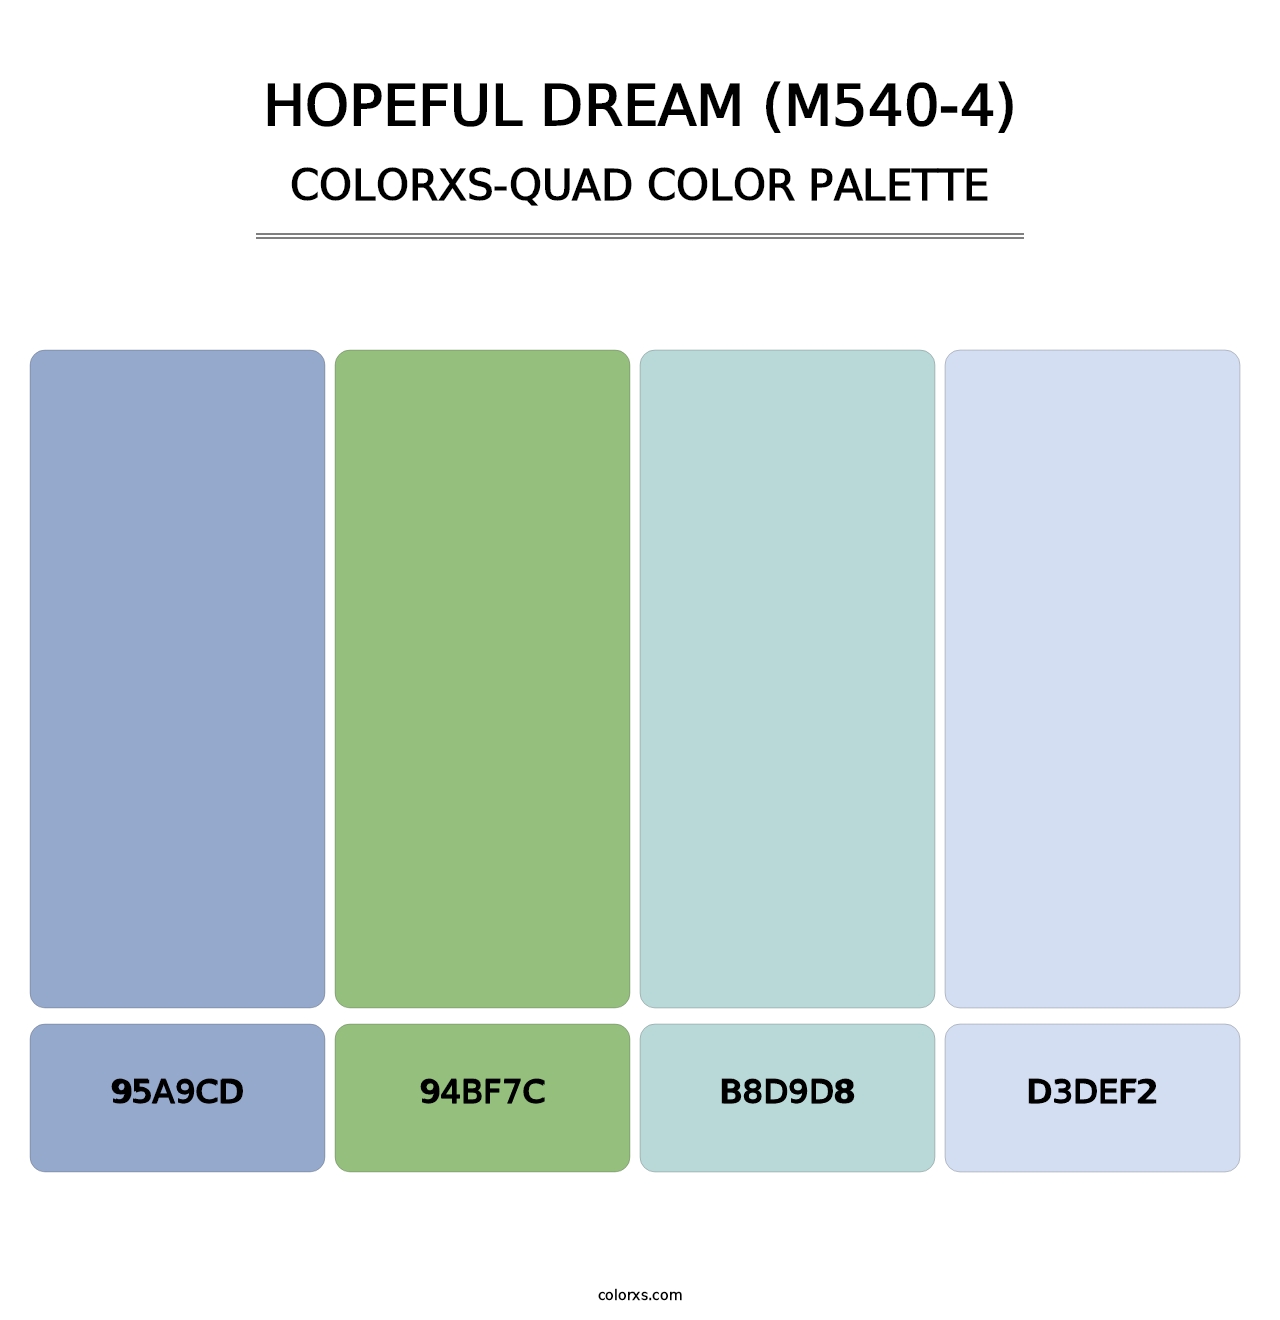 Hopeful Dream (M540-4) - Colorxs Quad Palette